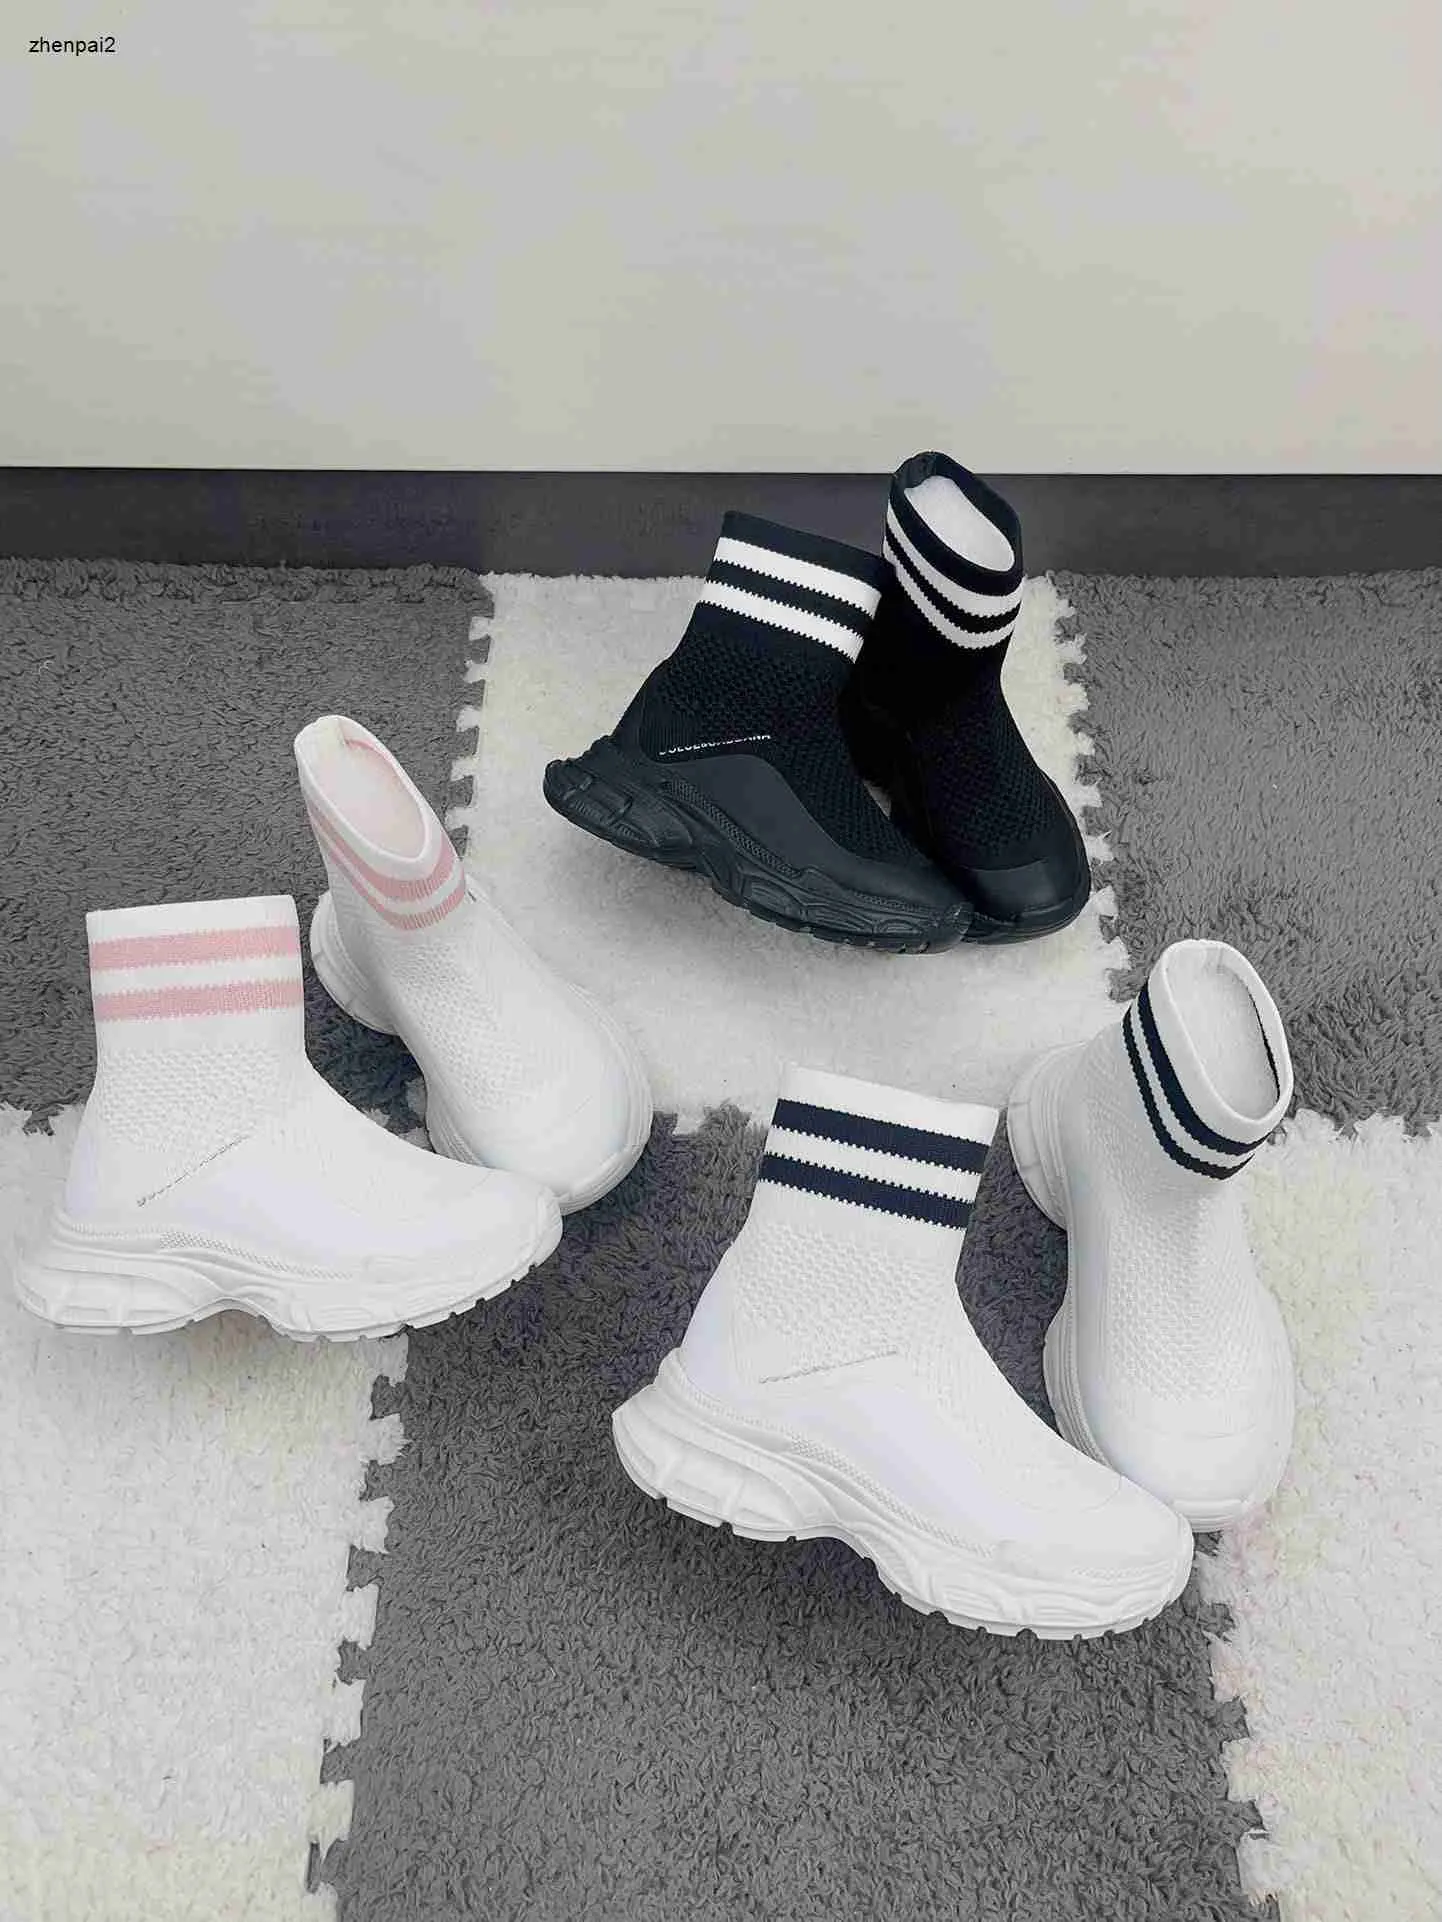 Luxury designer baby Sock shoes Stripe design Kids boots size 26-35 Including box Breathable knit design toddler sneakers Nov25